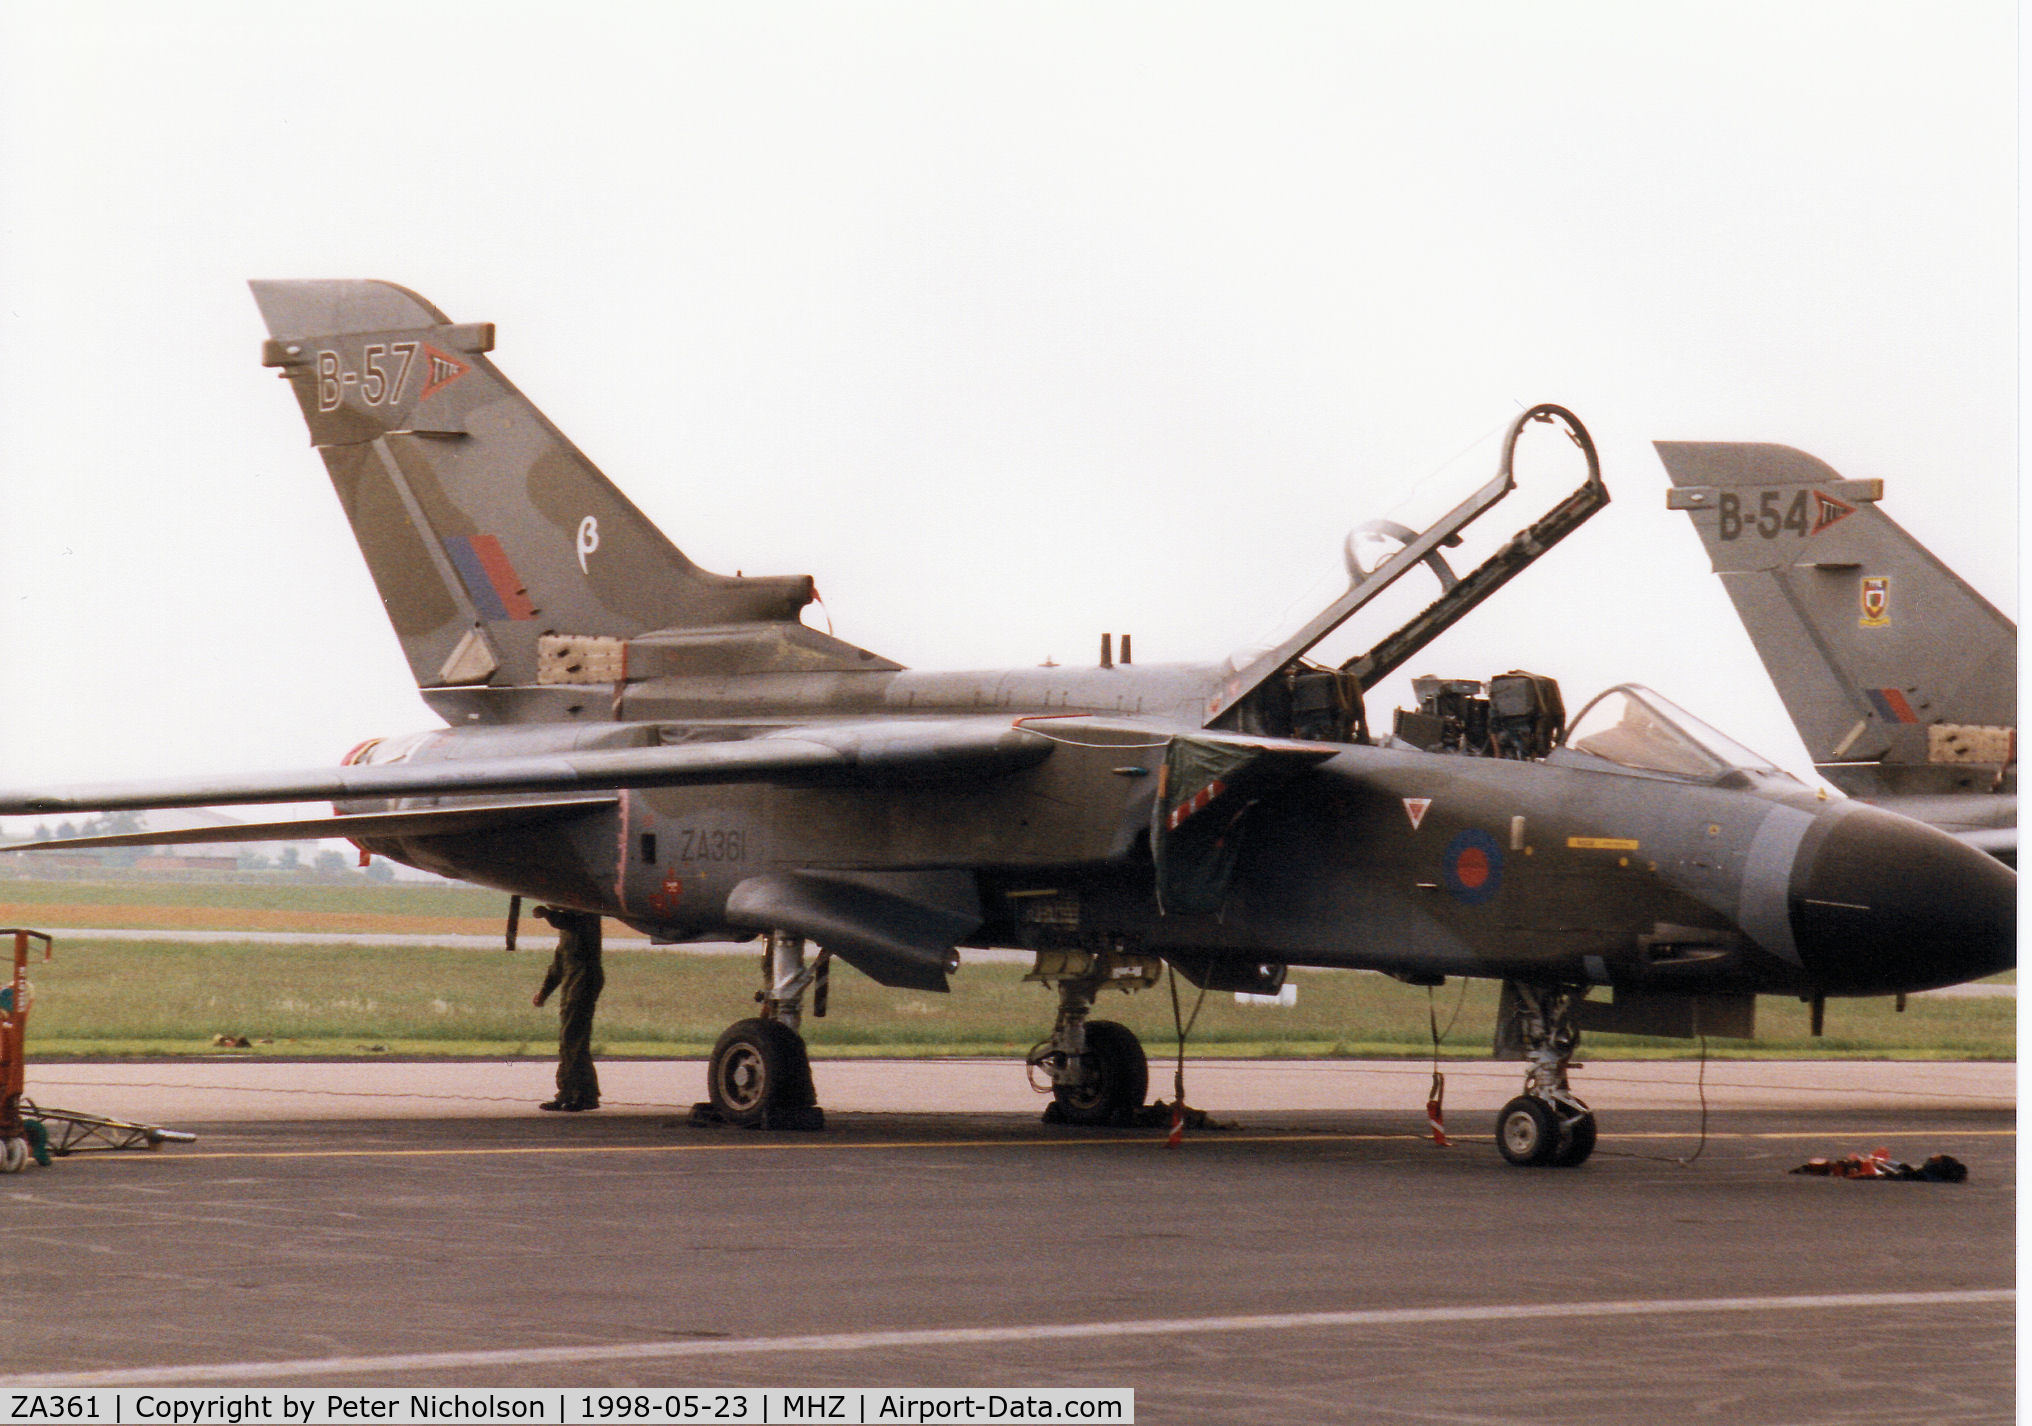 ZA361, 1981 Panavia Tornado GR.1 C/N 042/BS011/3022, Tornado GR.1 of B Squadron of the Tri-National Tornado Training Establishment - TTTE - based at RAF Cottesmore on the flight-line at the 1998 RAF Mildenhall Air Fete.